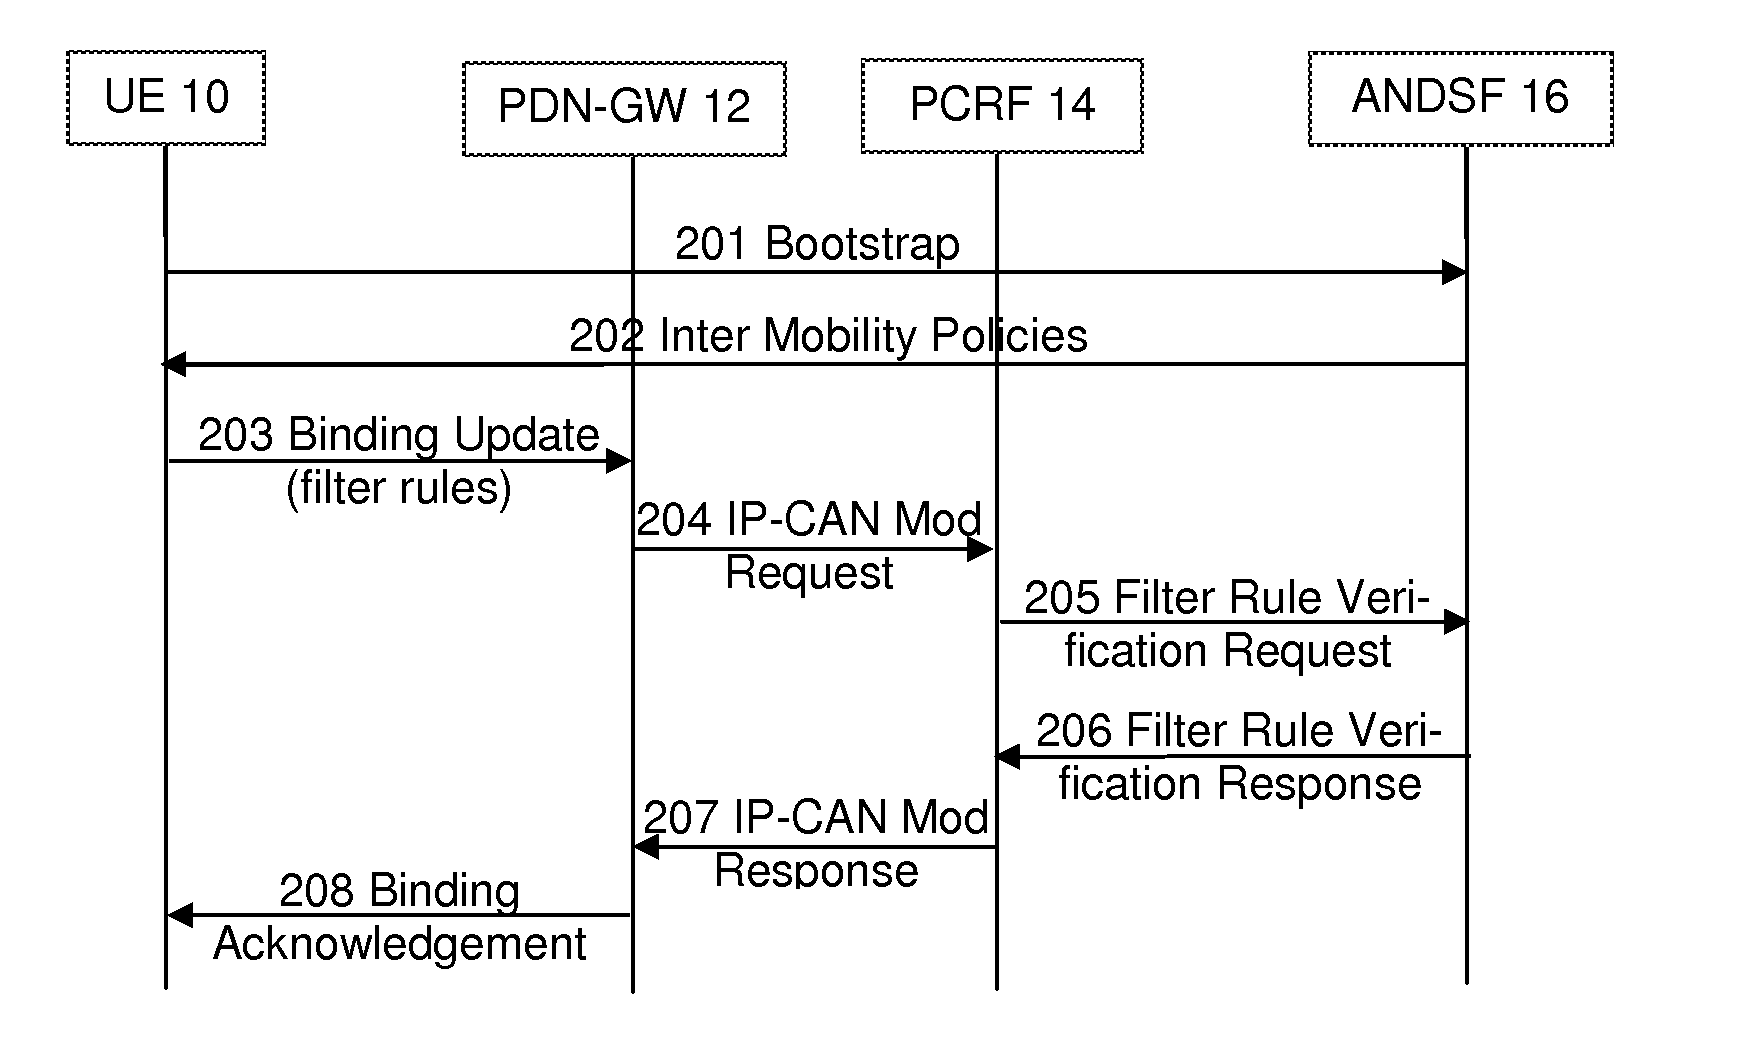 Flow mobility filter rule verification